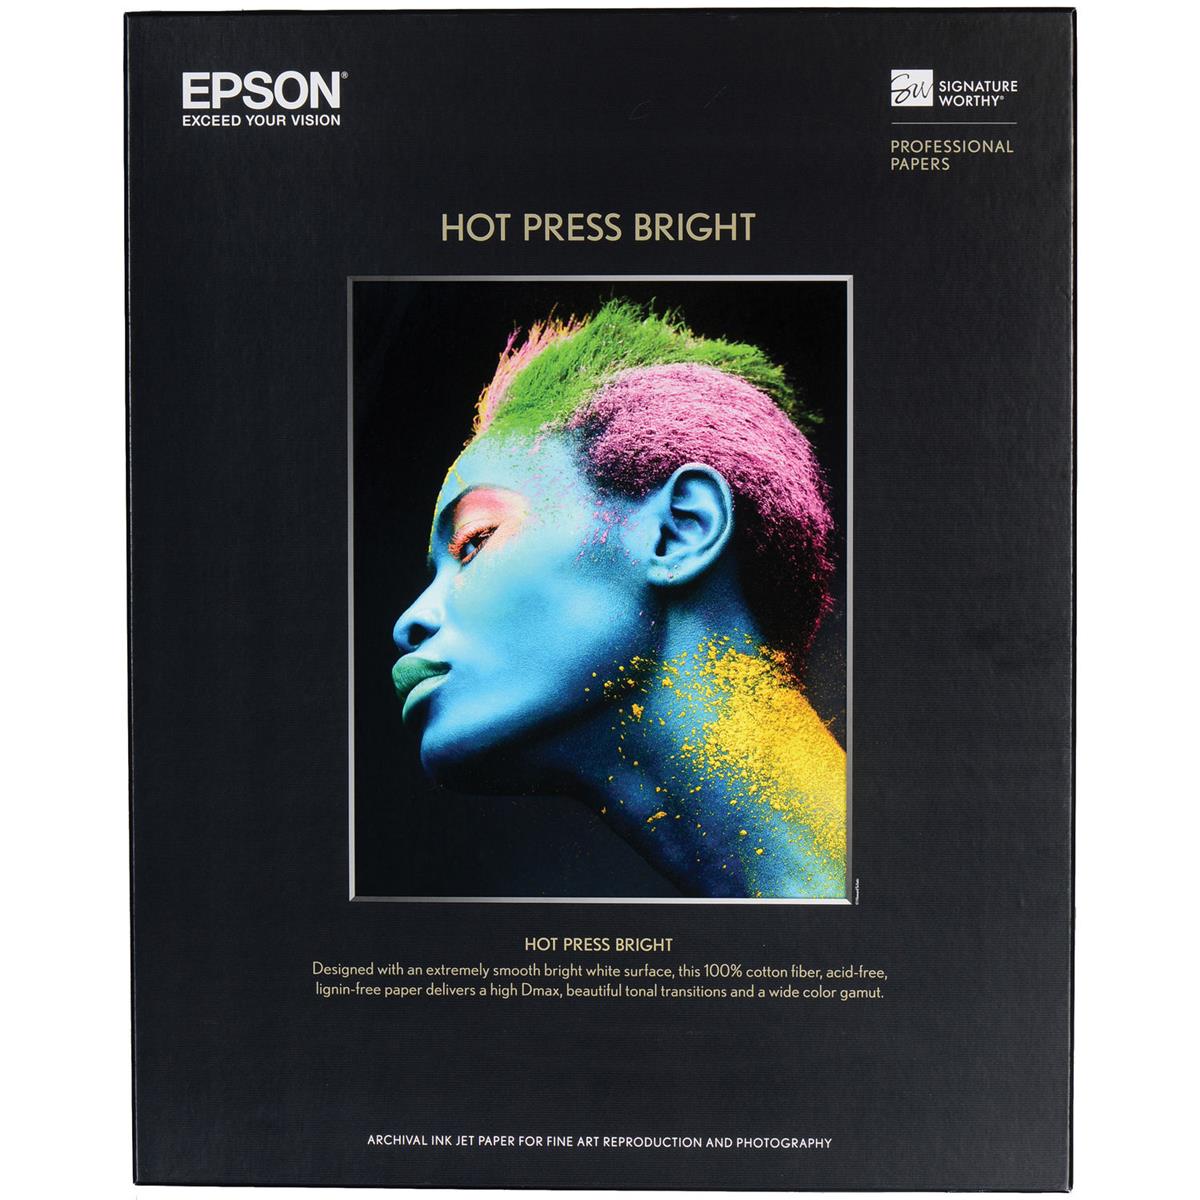 Epson Hot Press Bright Fine Art Smooth Matte Cotton Rag Inkjet Paper, 17 mil., 330 g/m2, 13x19", 25 Sheets